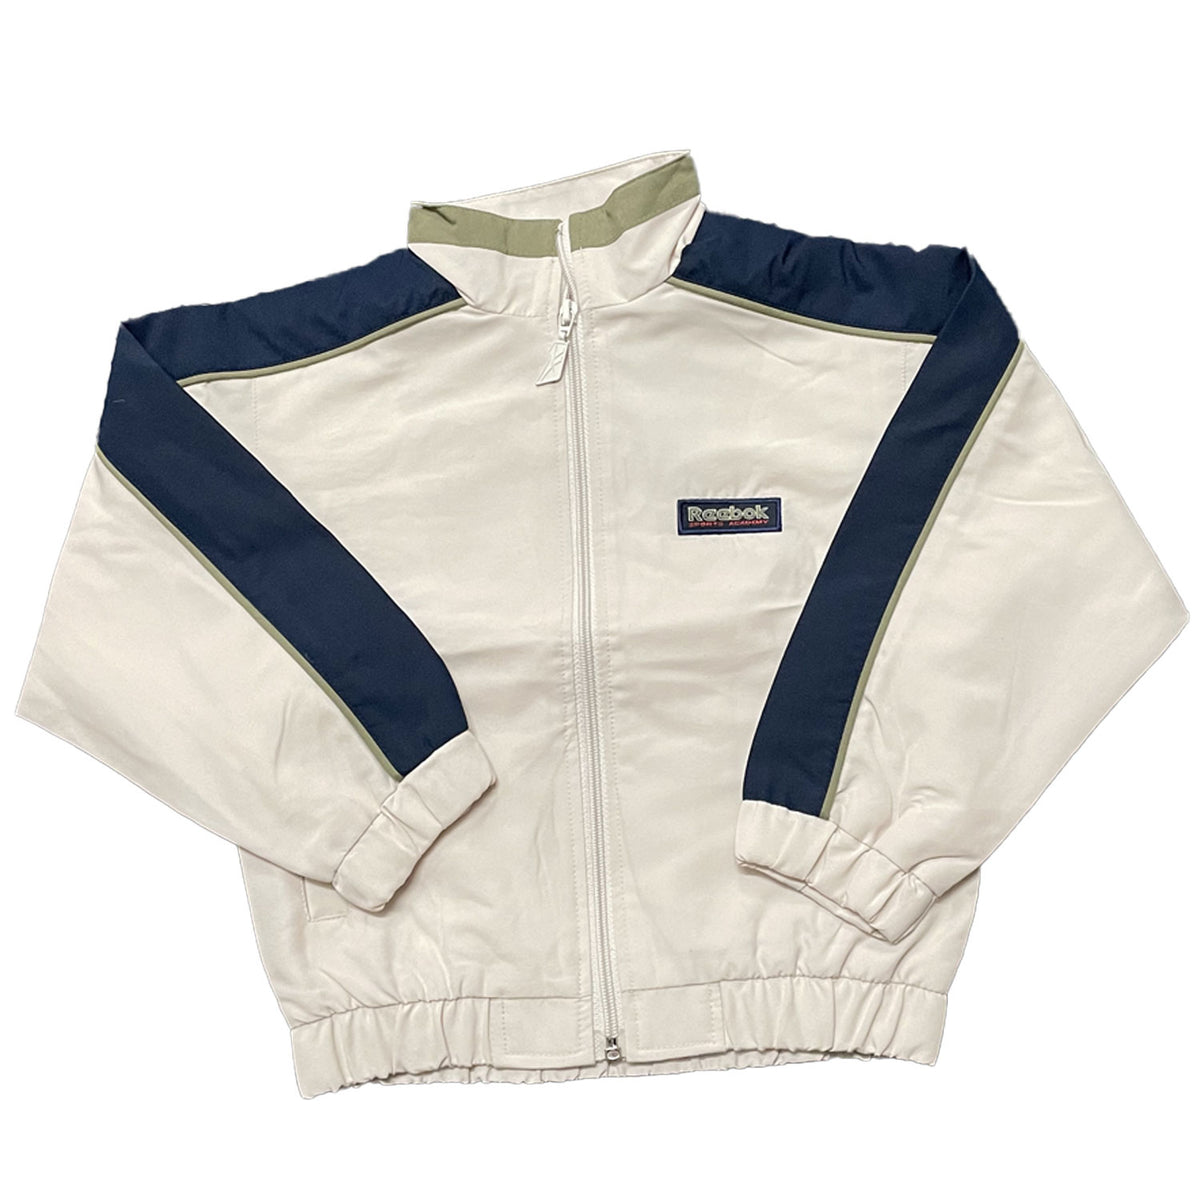 Reebok Infant Sports Range Jacket 2